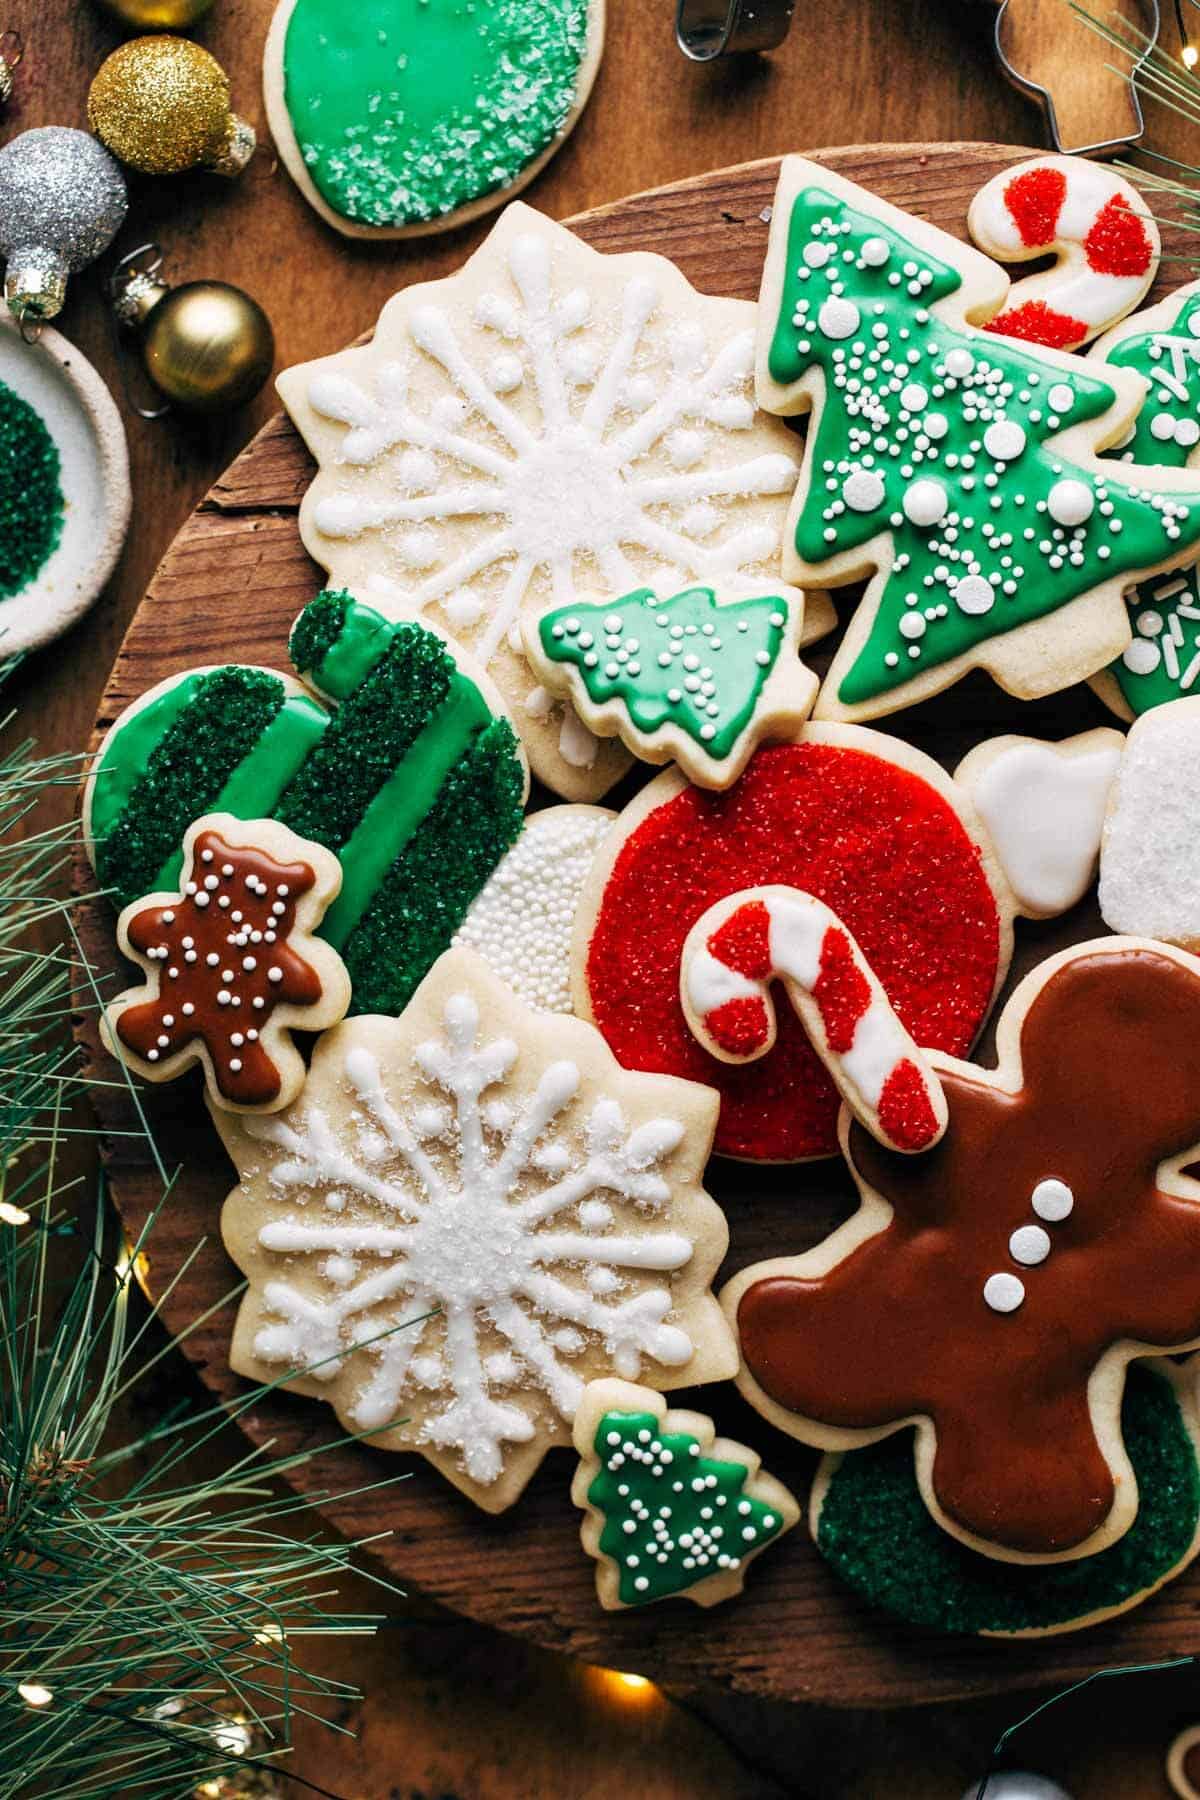 https://butternutbakeryblog.com/wp-content/uploads/2020/12/decorated-sugar-cookies.jpg